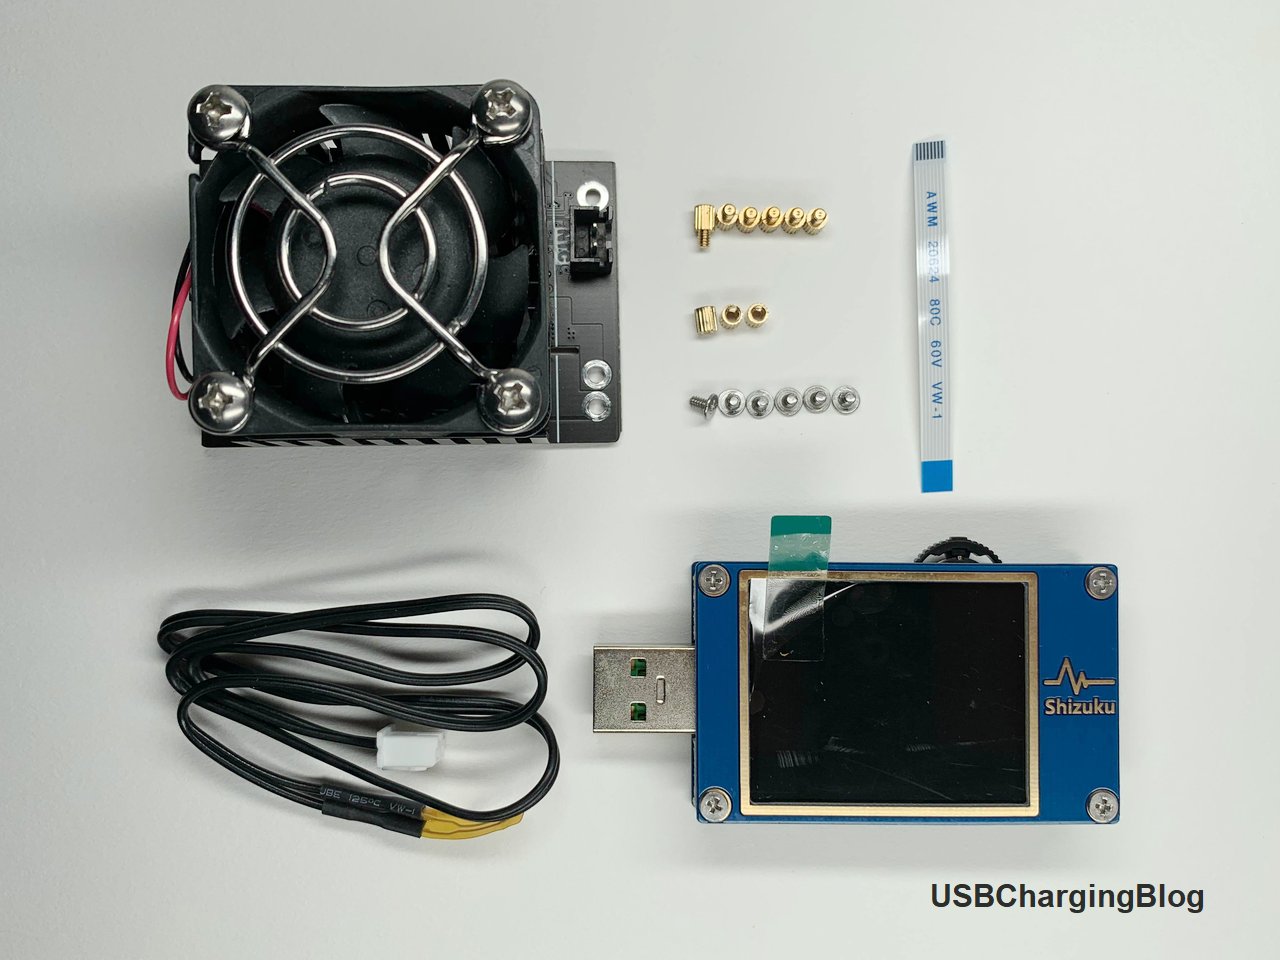 Shizuku / AVHzY CT-3 / Power-Z KT002 / Atorch UT18 USB Tester and 